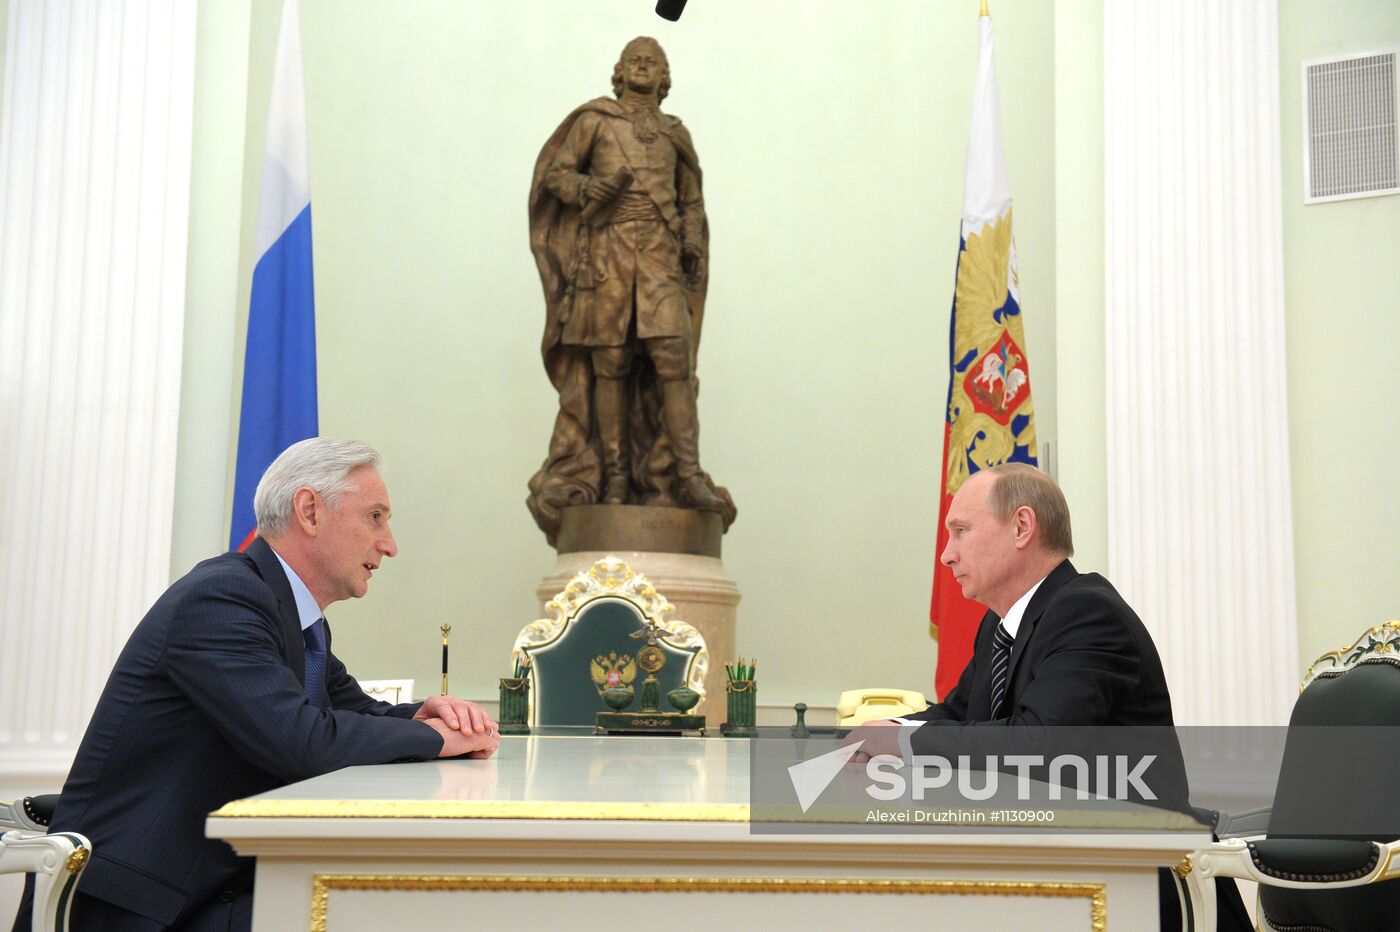 Vladimir Putin meets with Zinetula Bilyaletdinov